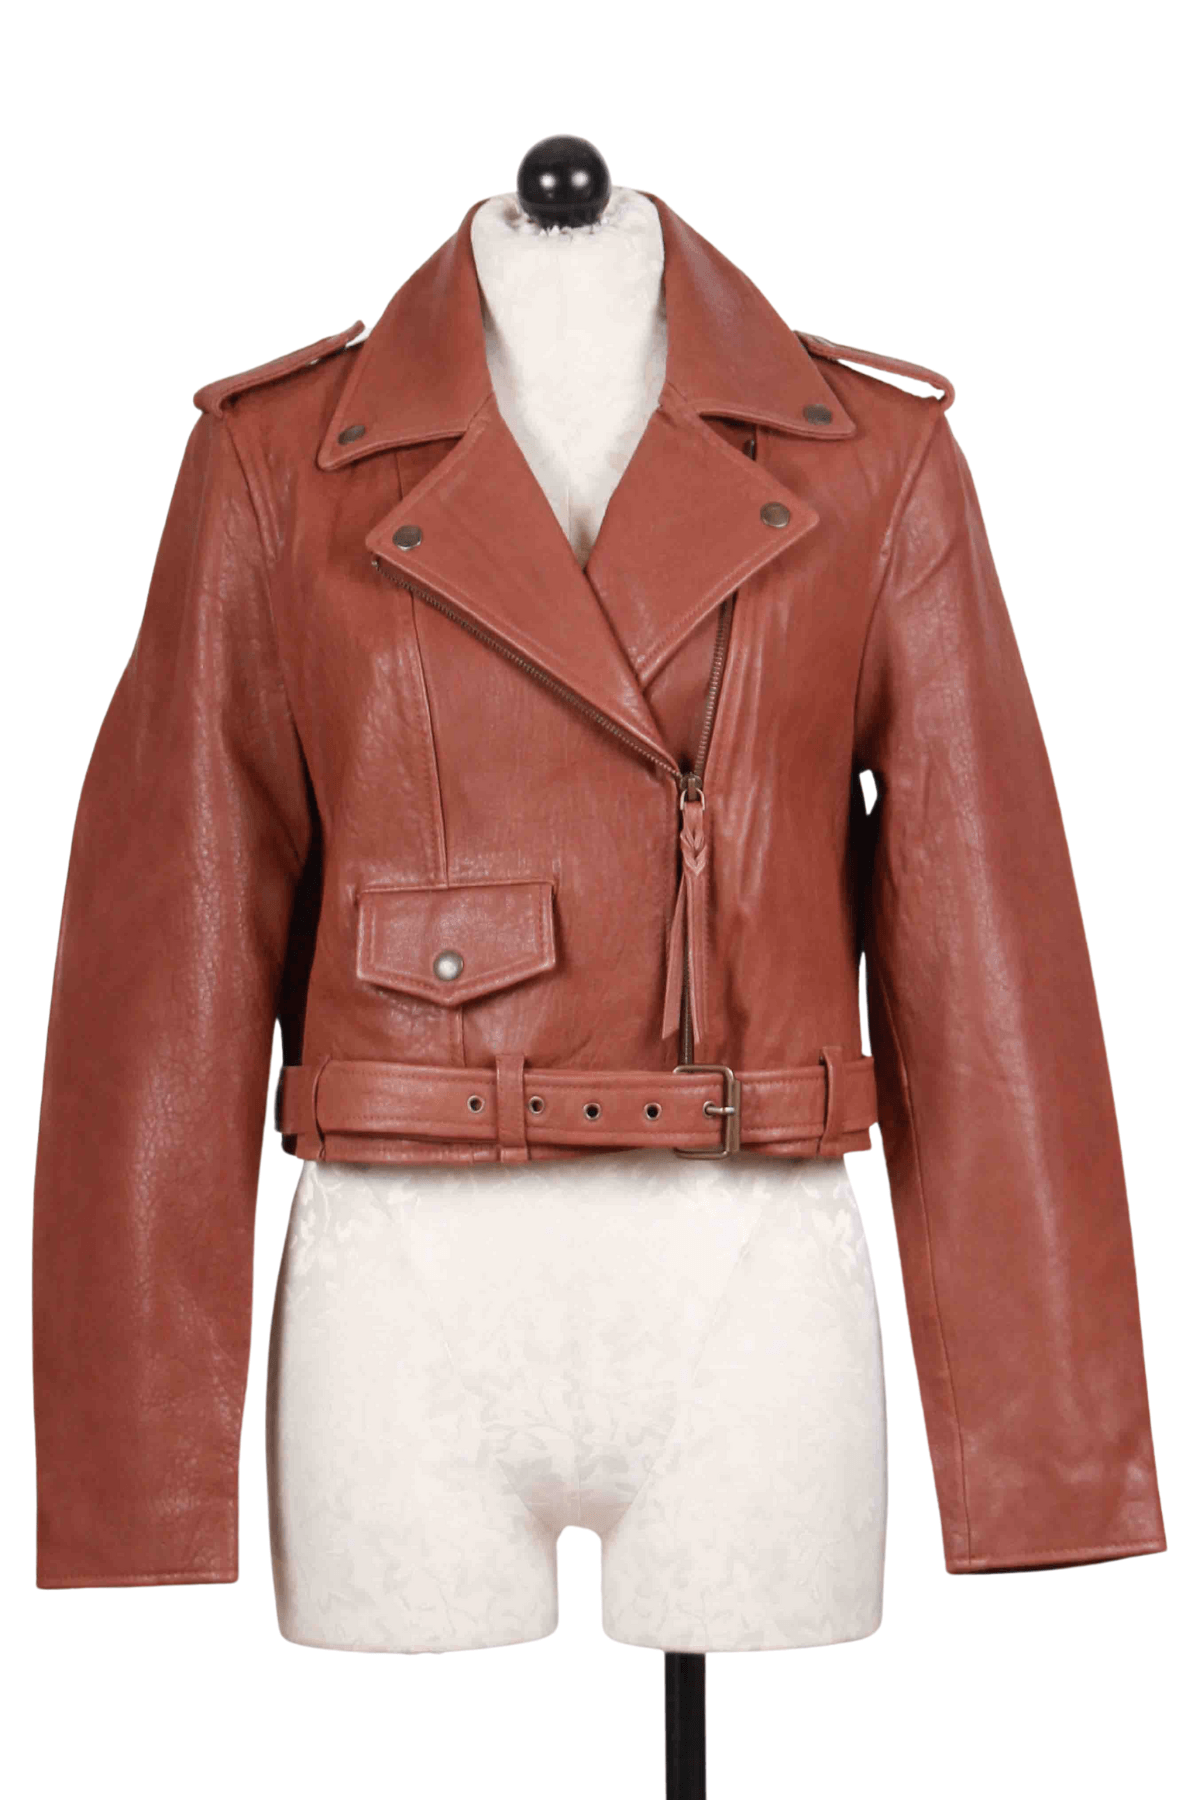 Cognac Leather Jacket by Cleobella